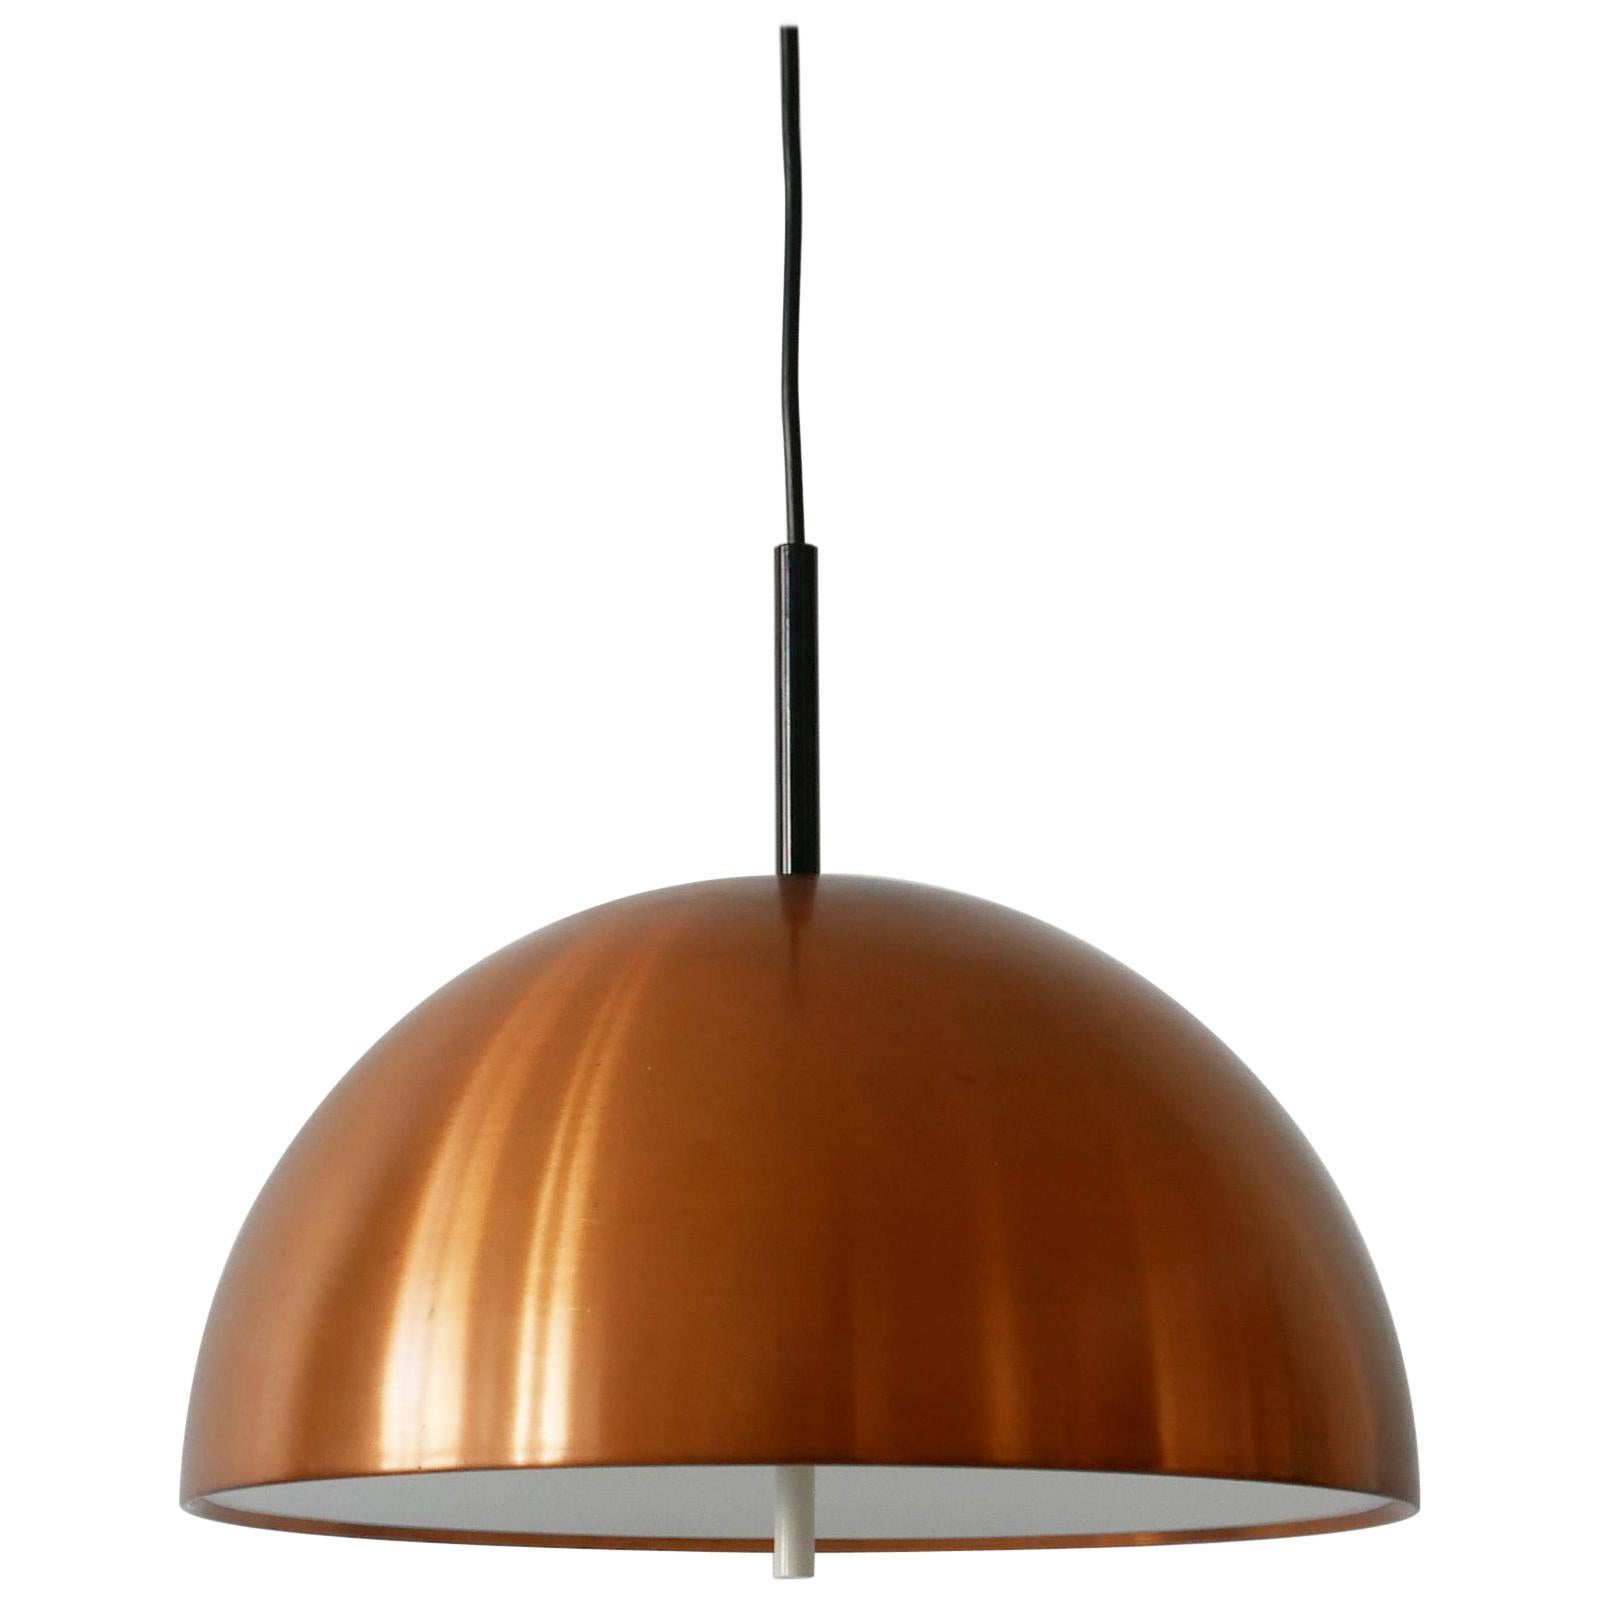 Elegant Mid-Century Modern Copper Pendant Lamp by Staff & Schwarz 1960s, Germany For Sale